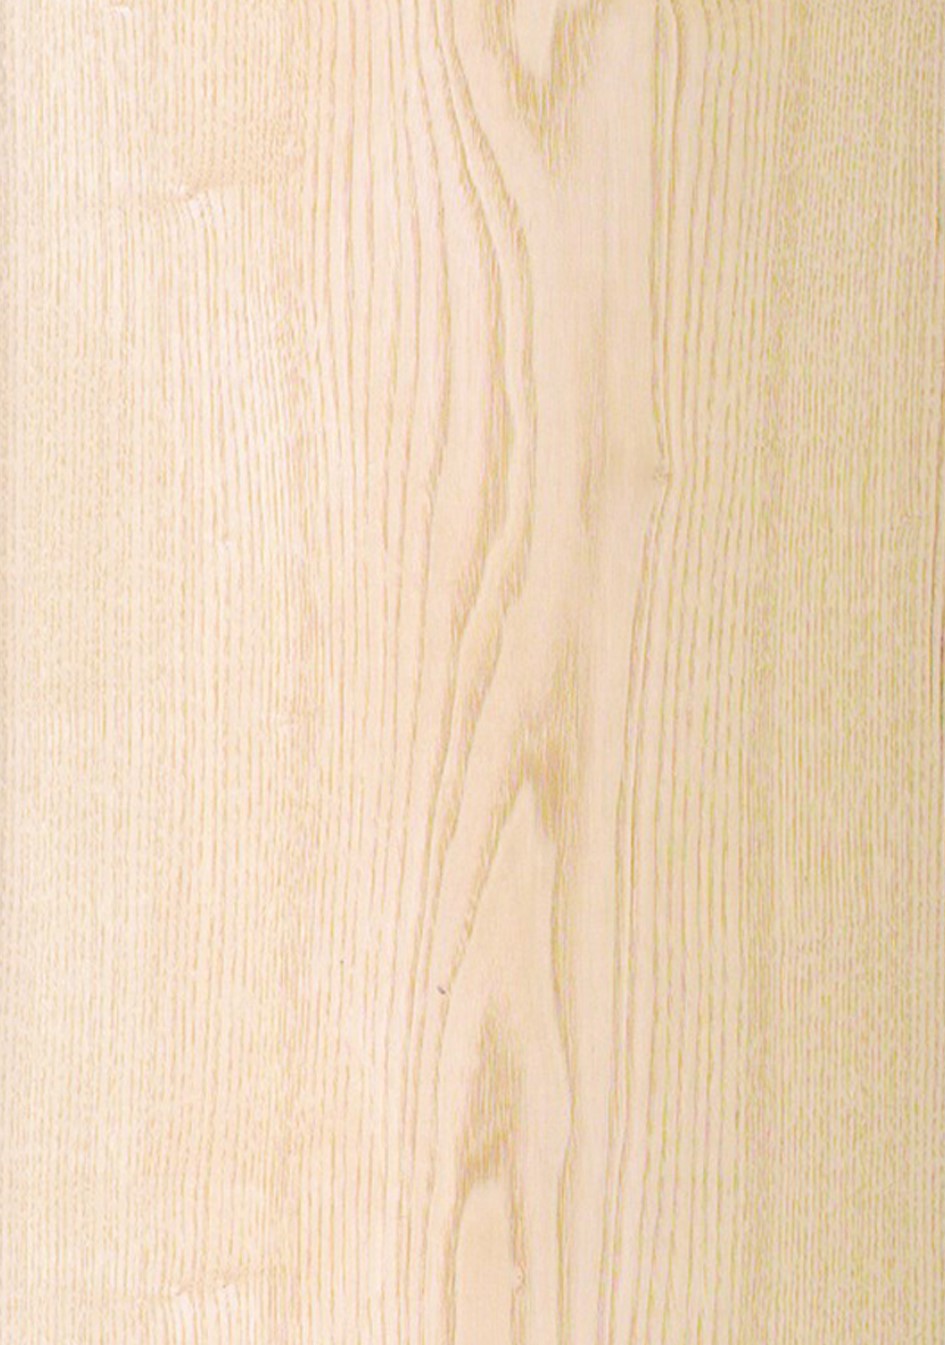 Kernesche Olivesche Esche Furnier Intarsien  Modellbau  Holz basteln 2088 